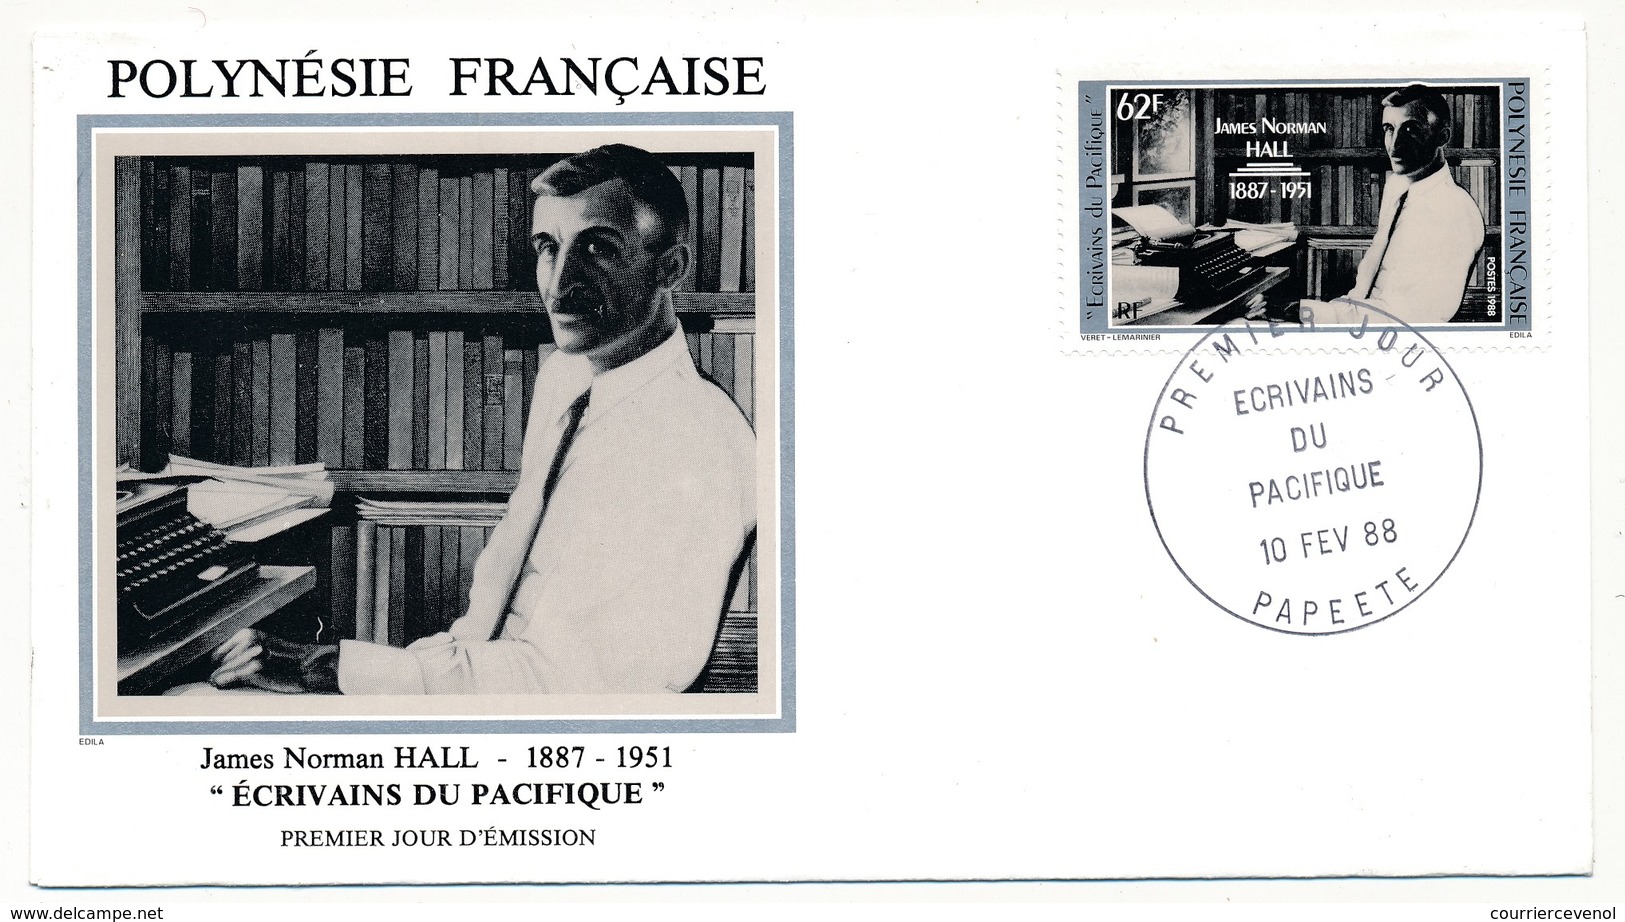 POLYNESIE FRANCAISE - 2 FDC - Ecrivains Du Pacifique - James Norman Hall / Charles Bernard Nordhoff - 1988 - FDC